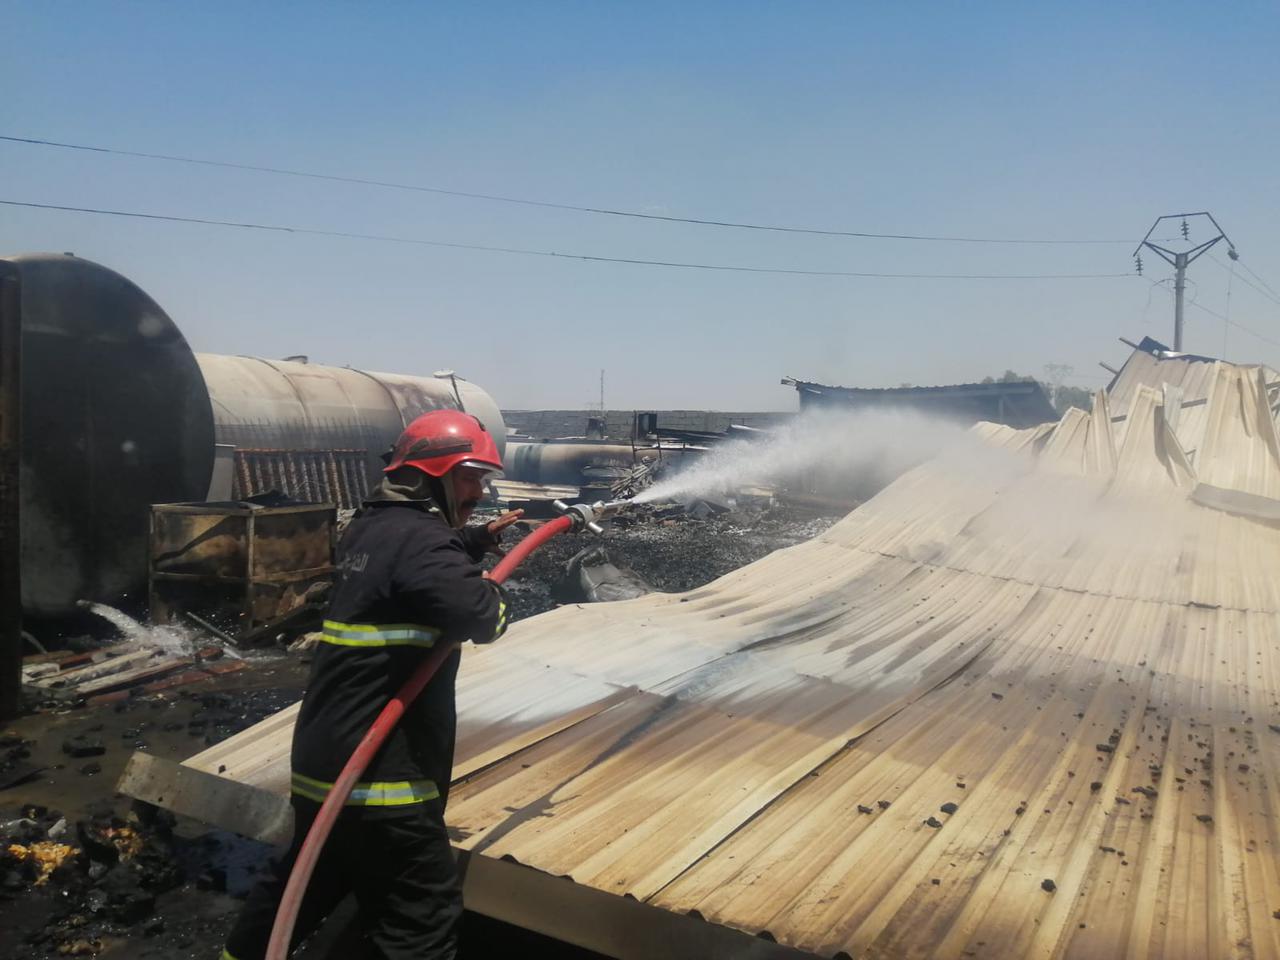 خسائر فادحة بنشوب حريق "هائل" داخل معمل للعصائر شمالي بغداد .. صور 